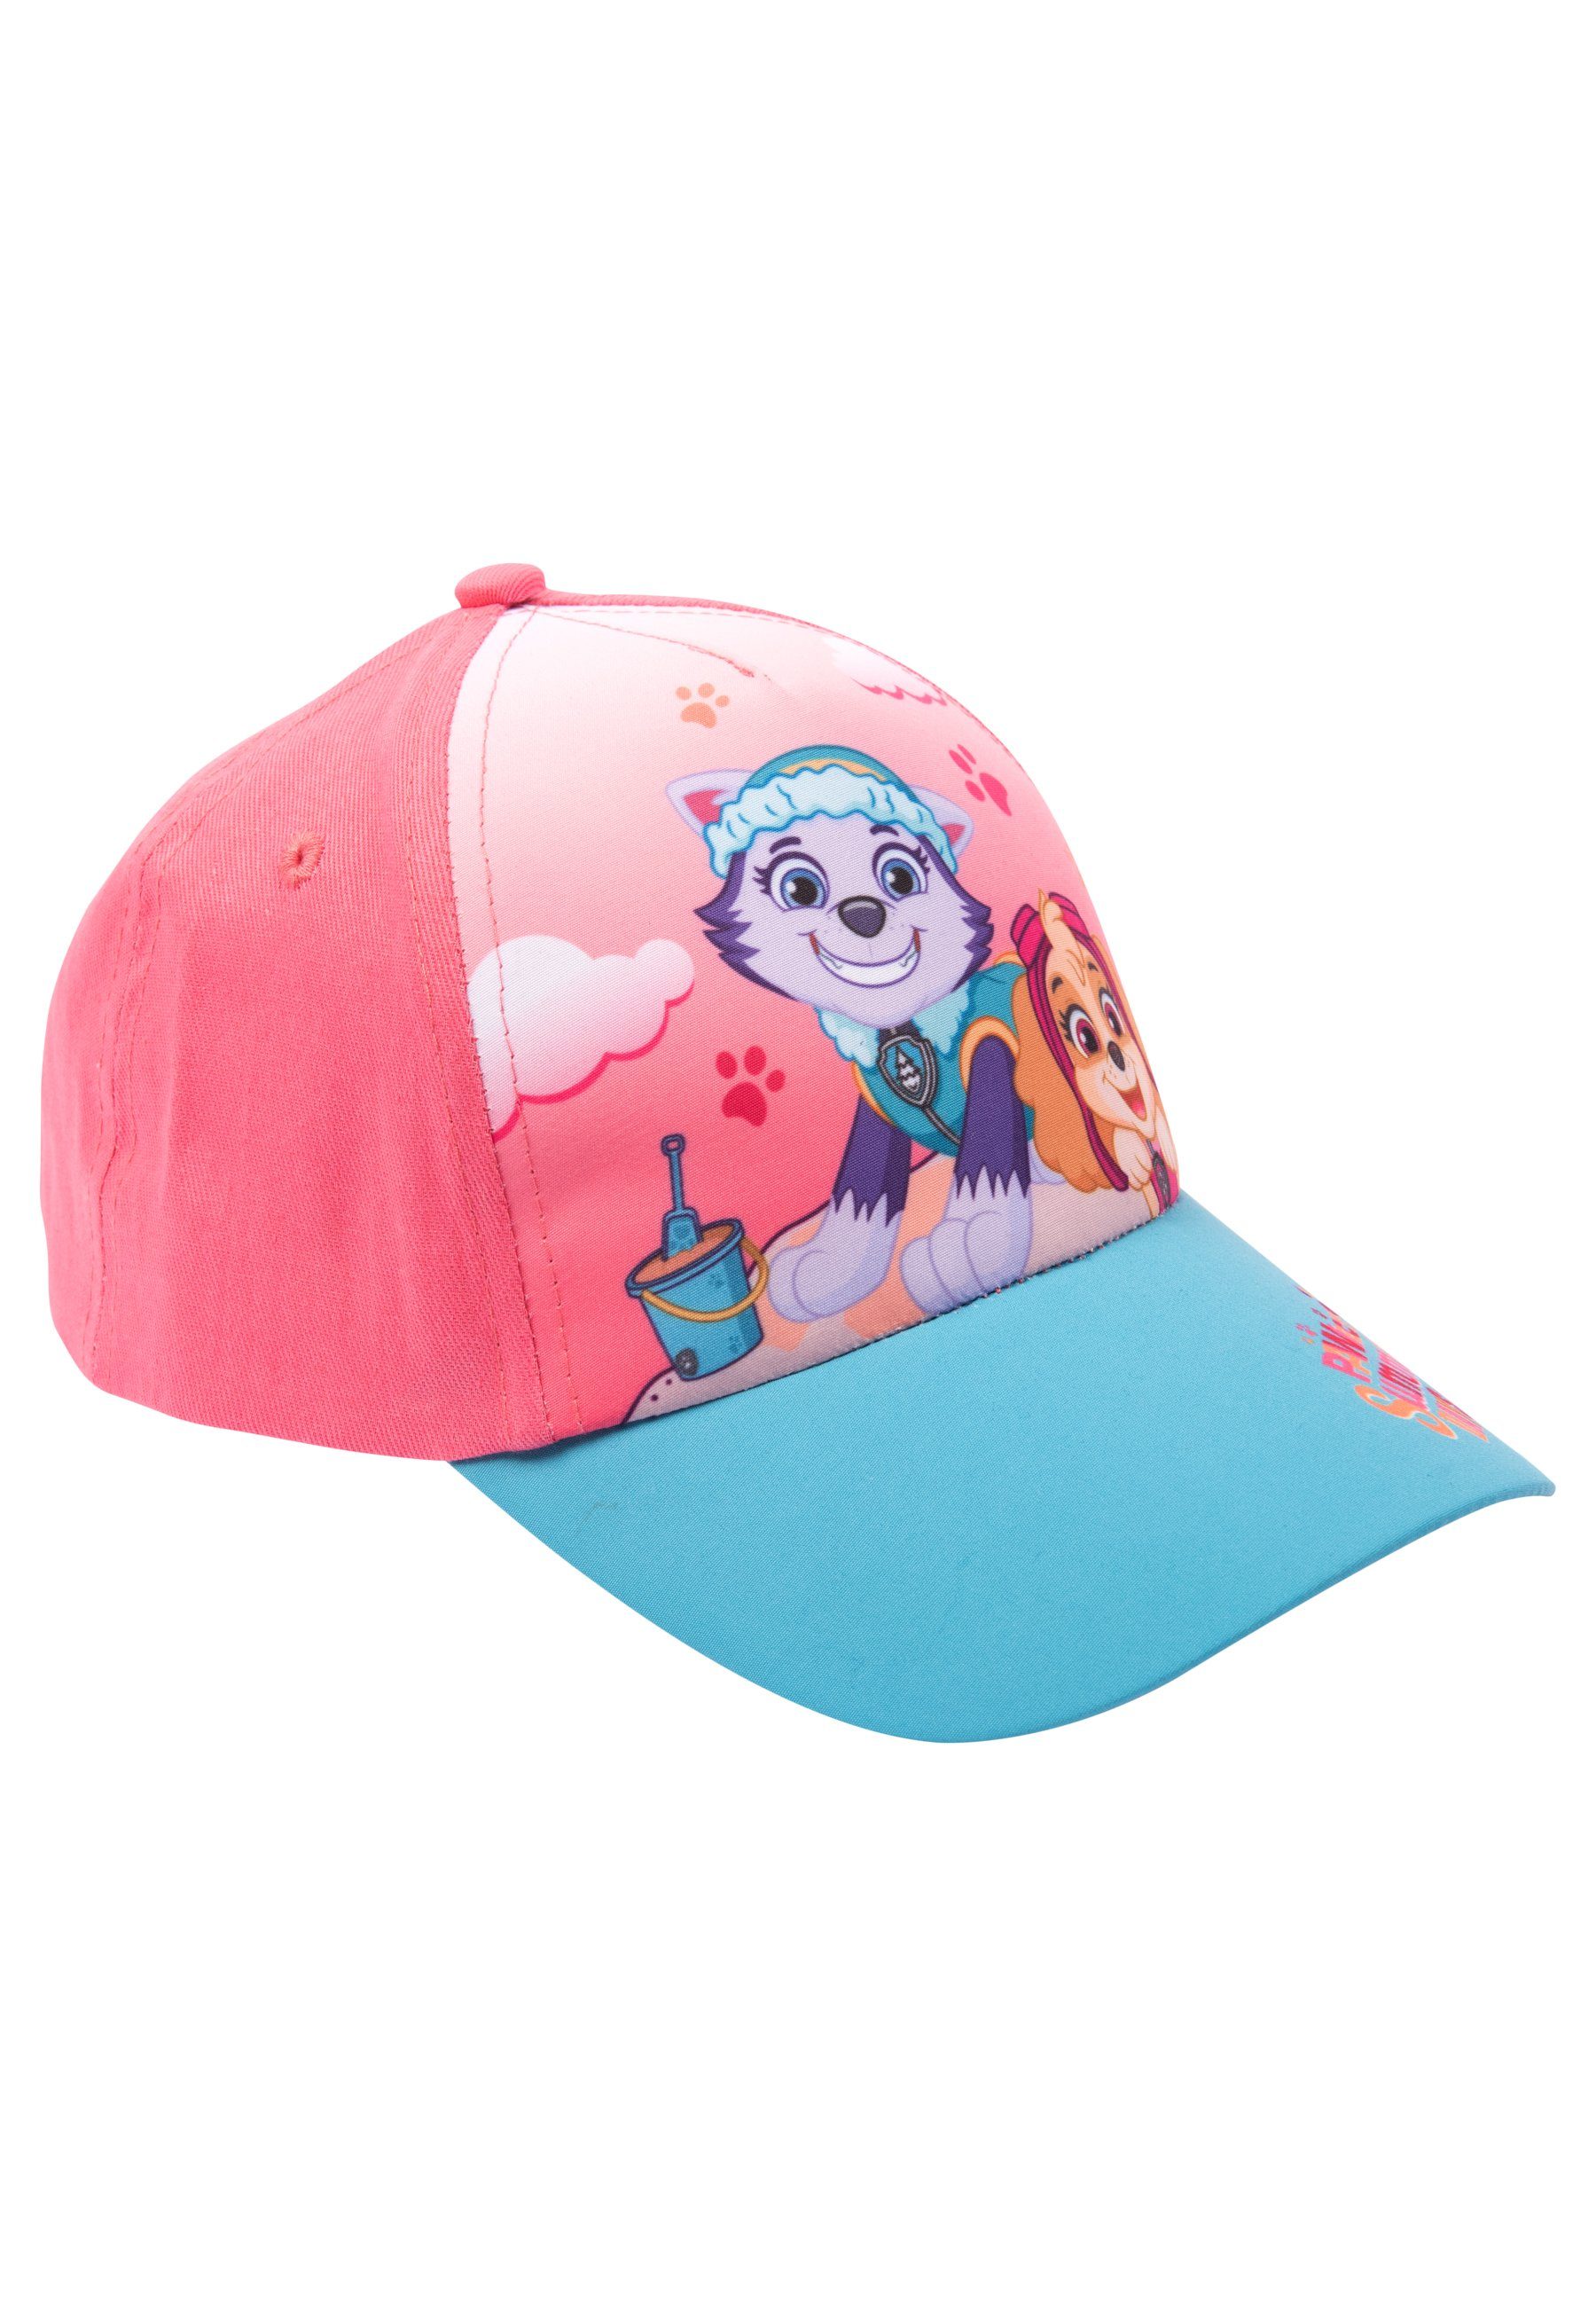 Kappe Baseball Basecap Labels® Baseballkappe Patrol United Mädchen Rosa/Blau Kinder Paw Cap Cap